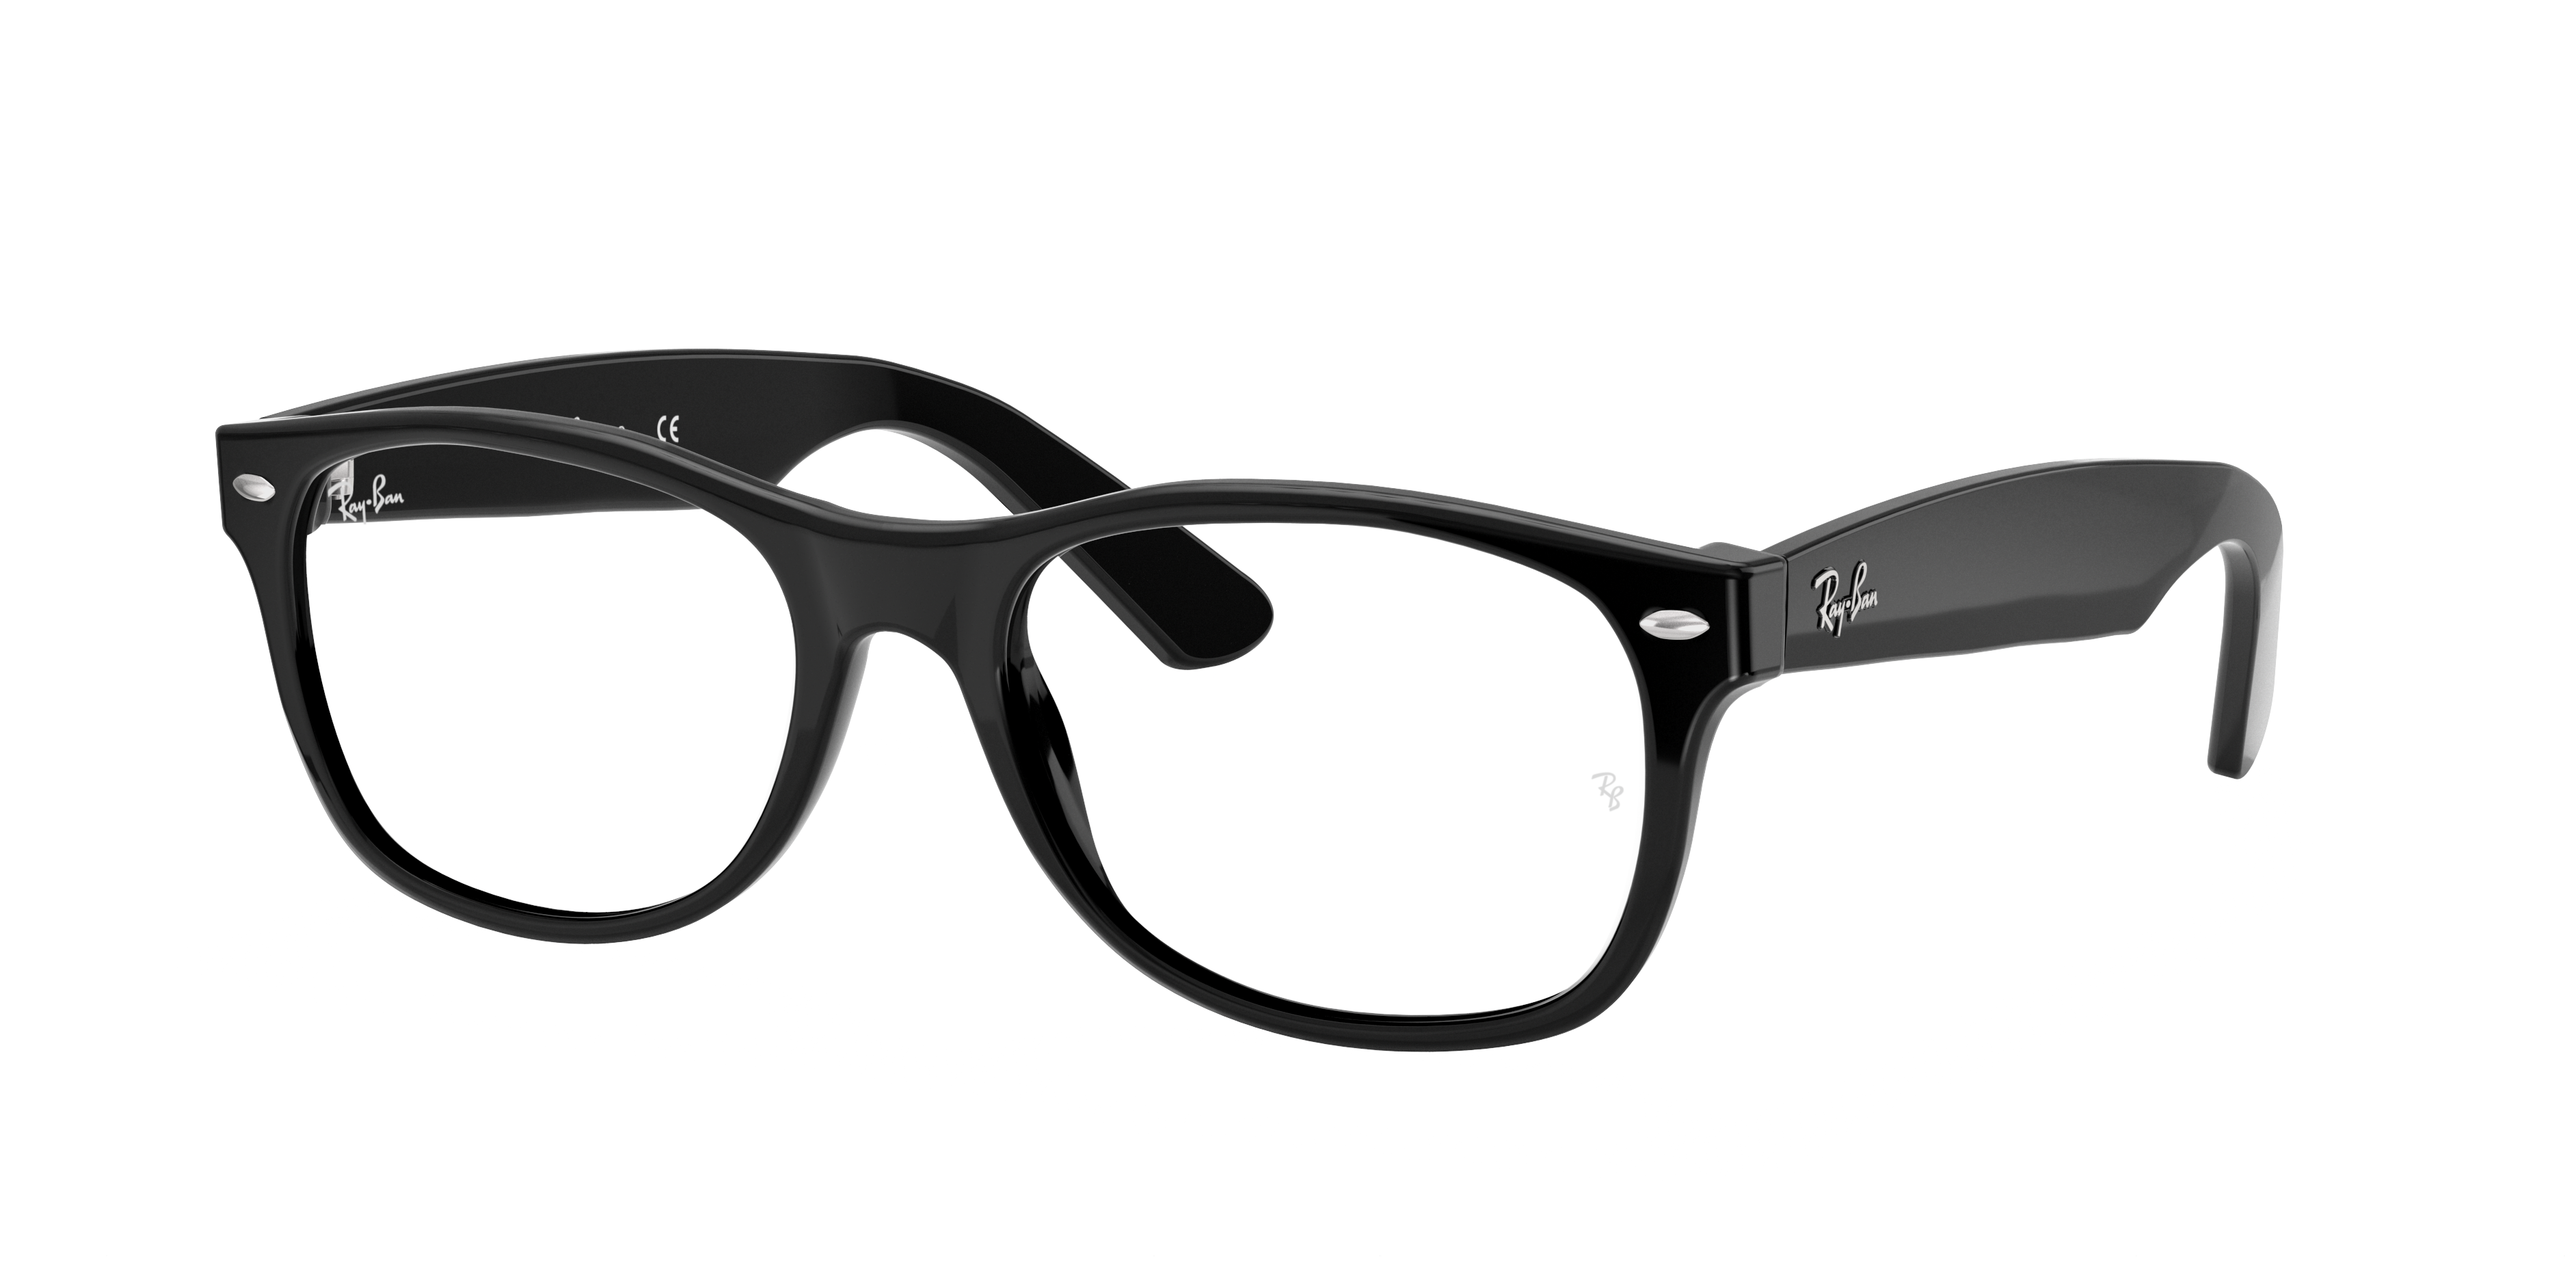 New Wayfarer Eyeglasses with Black Frame | Ray-Ban®